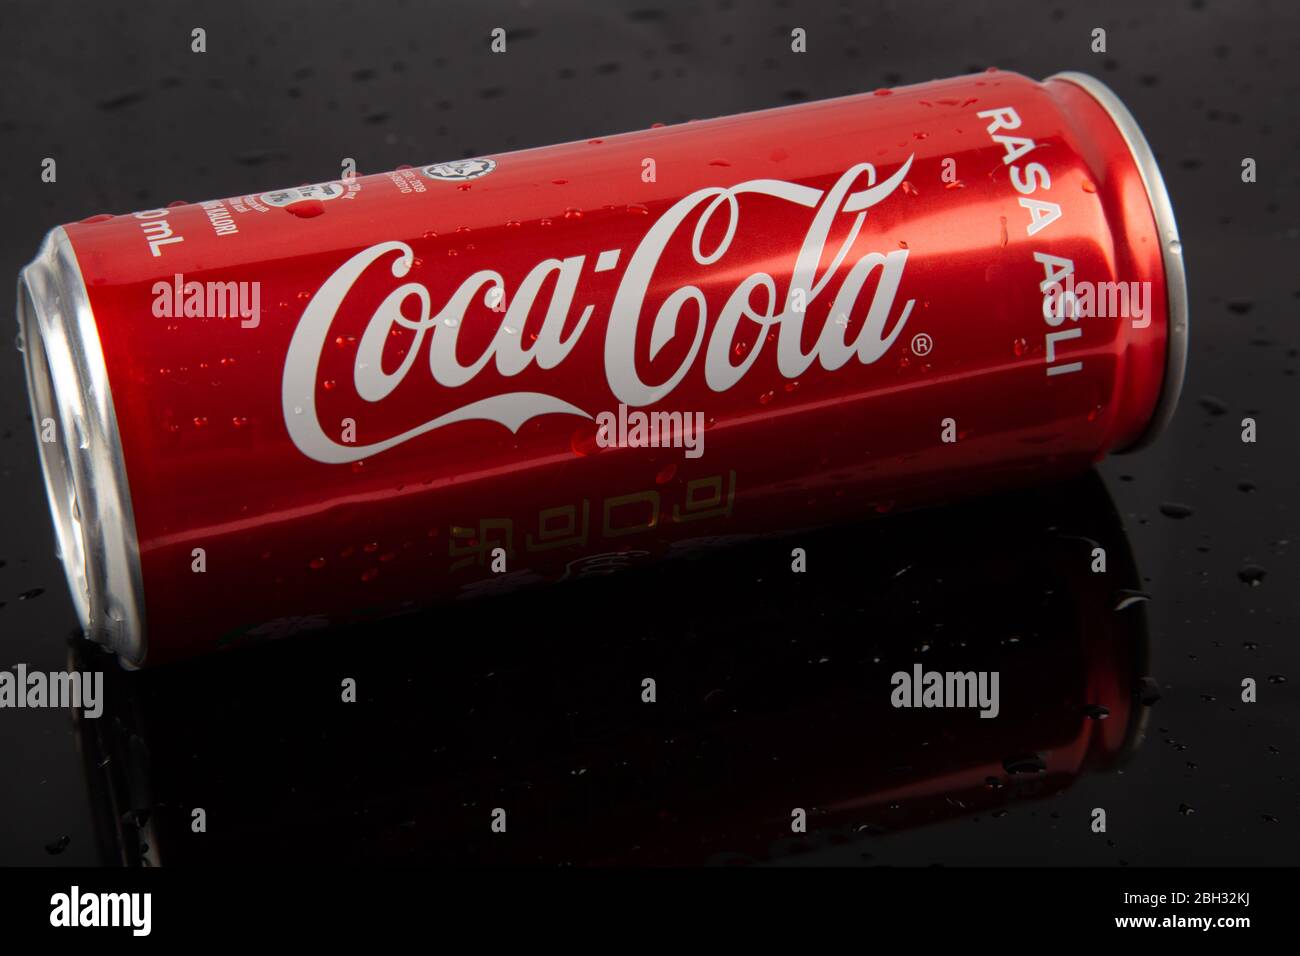 Boycott coca cola malaysia